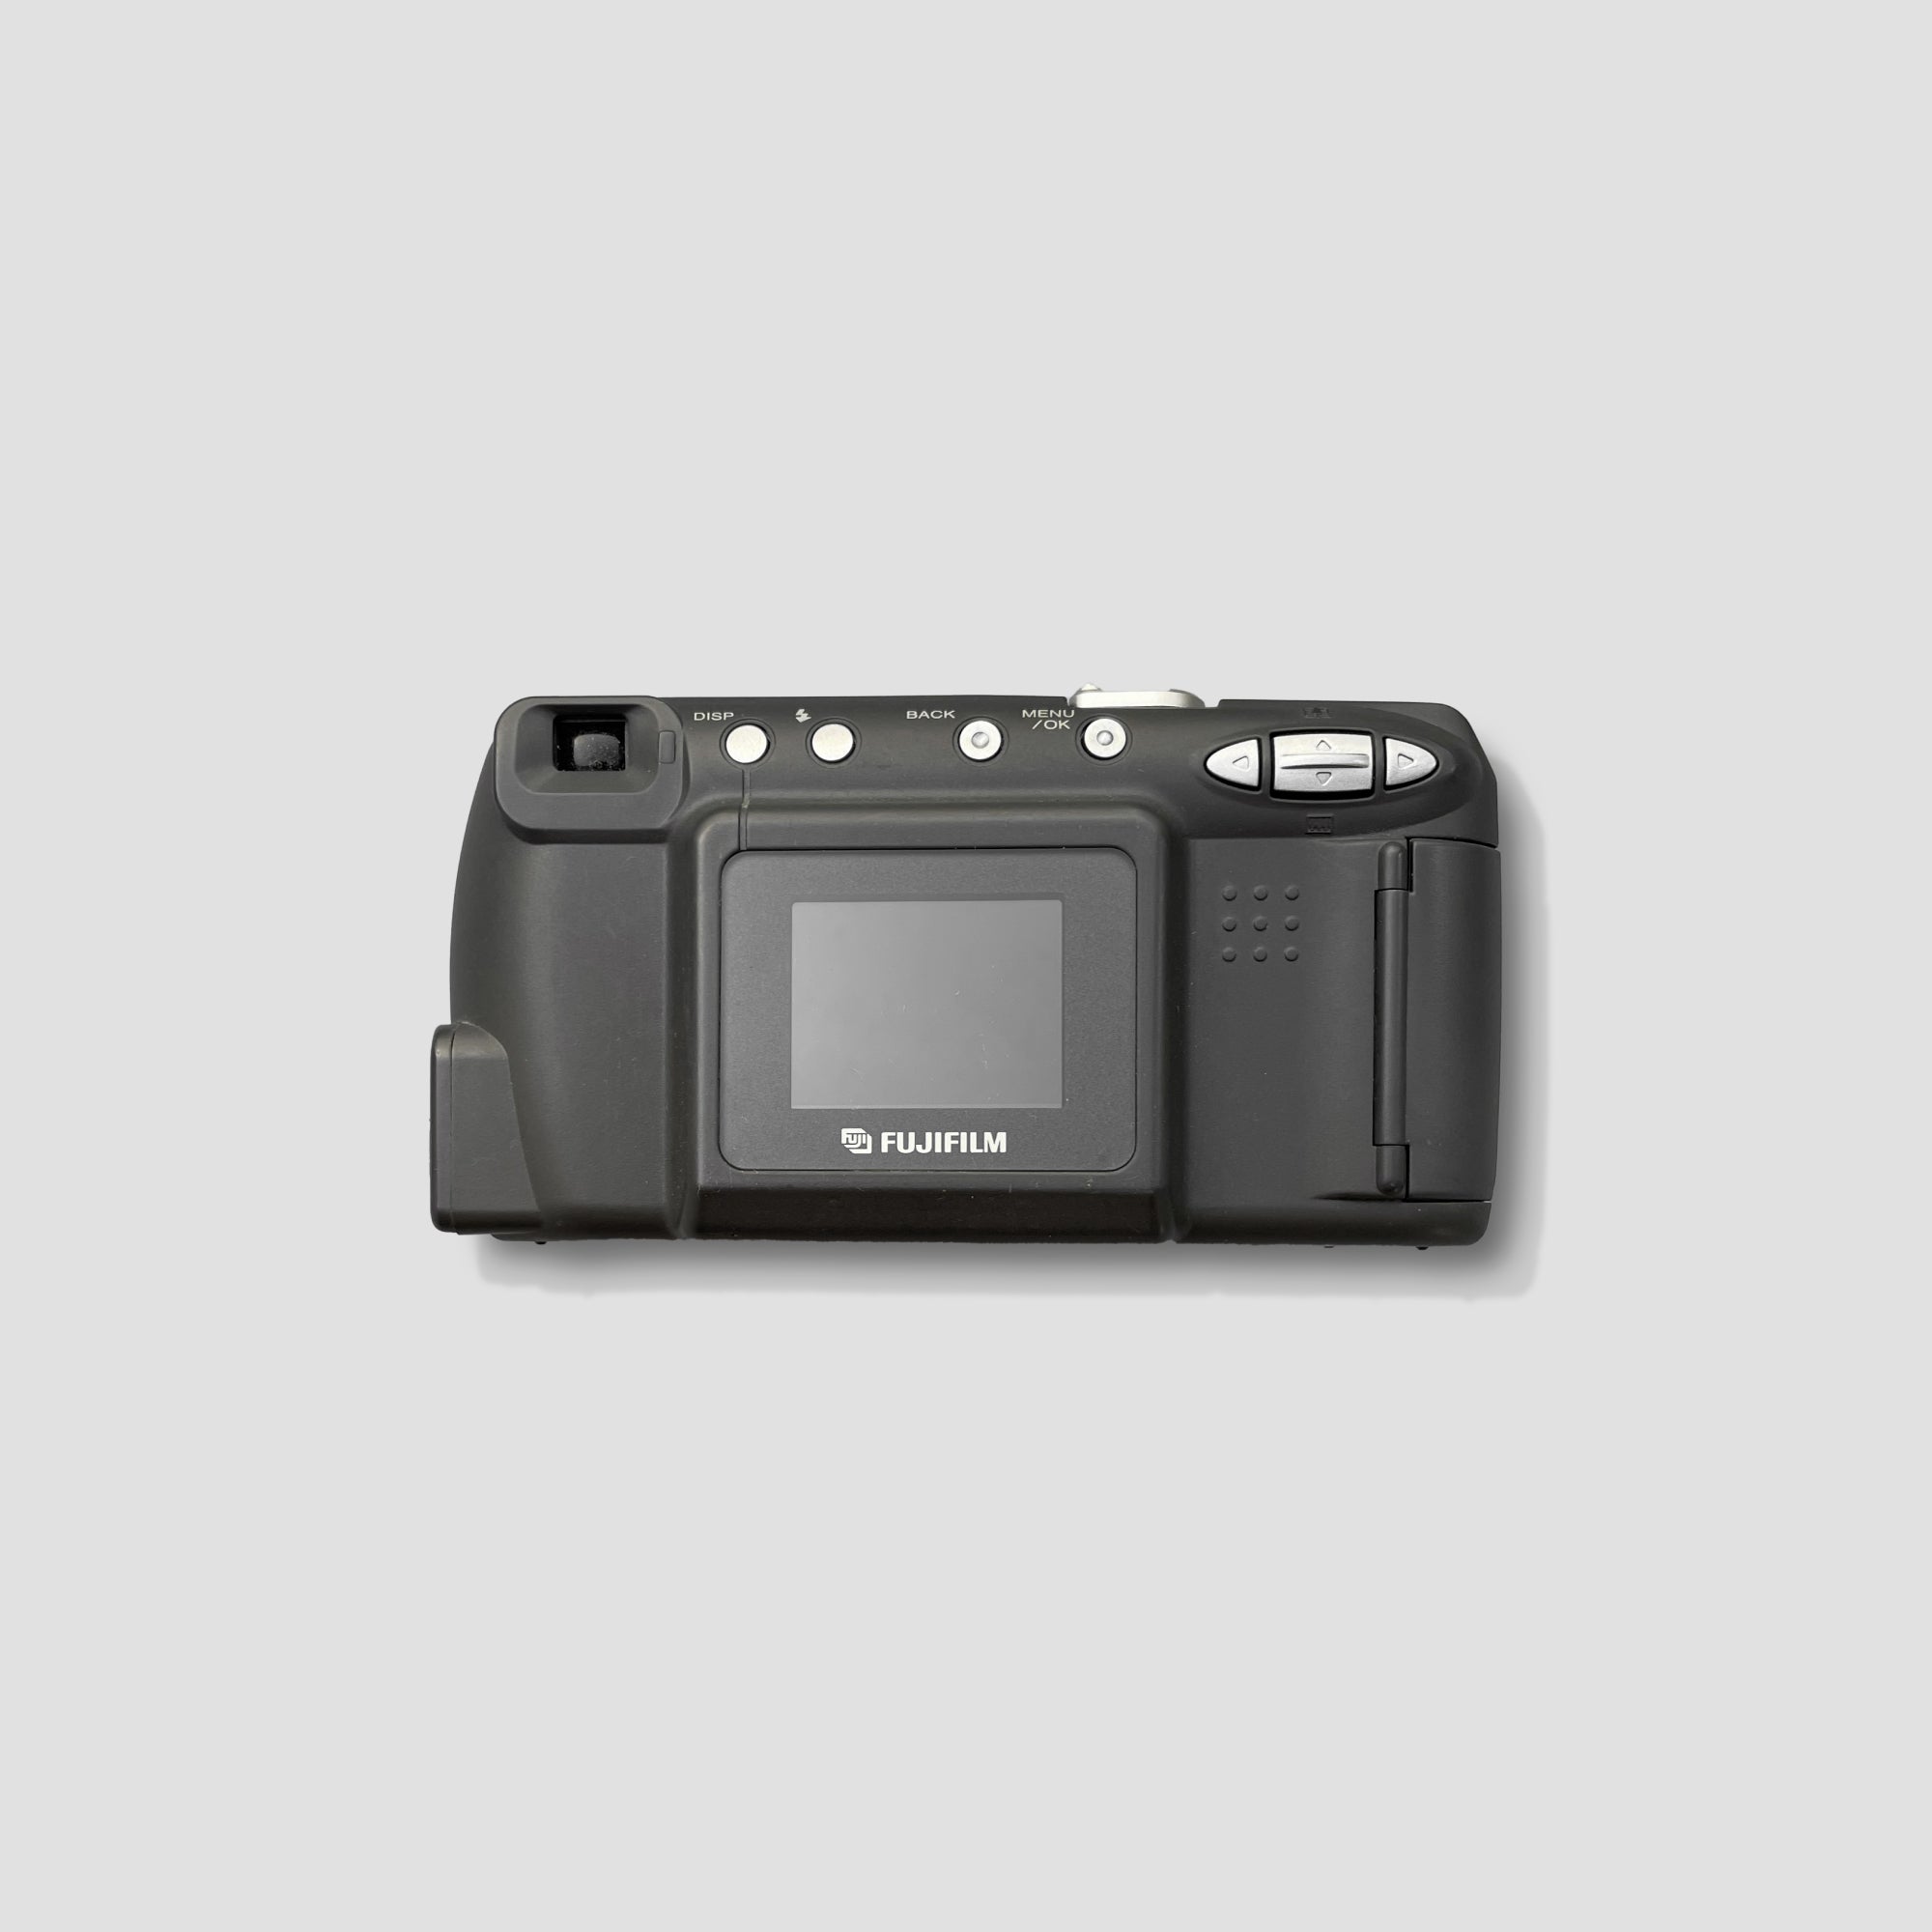 Fujifilm Finepix 2400 Zoom